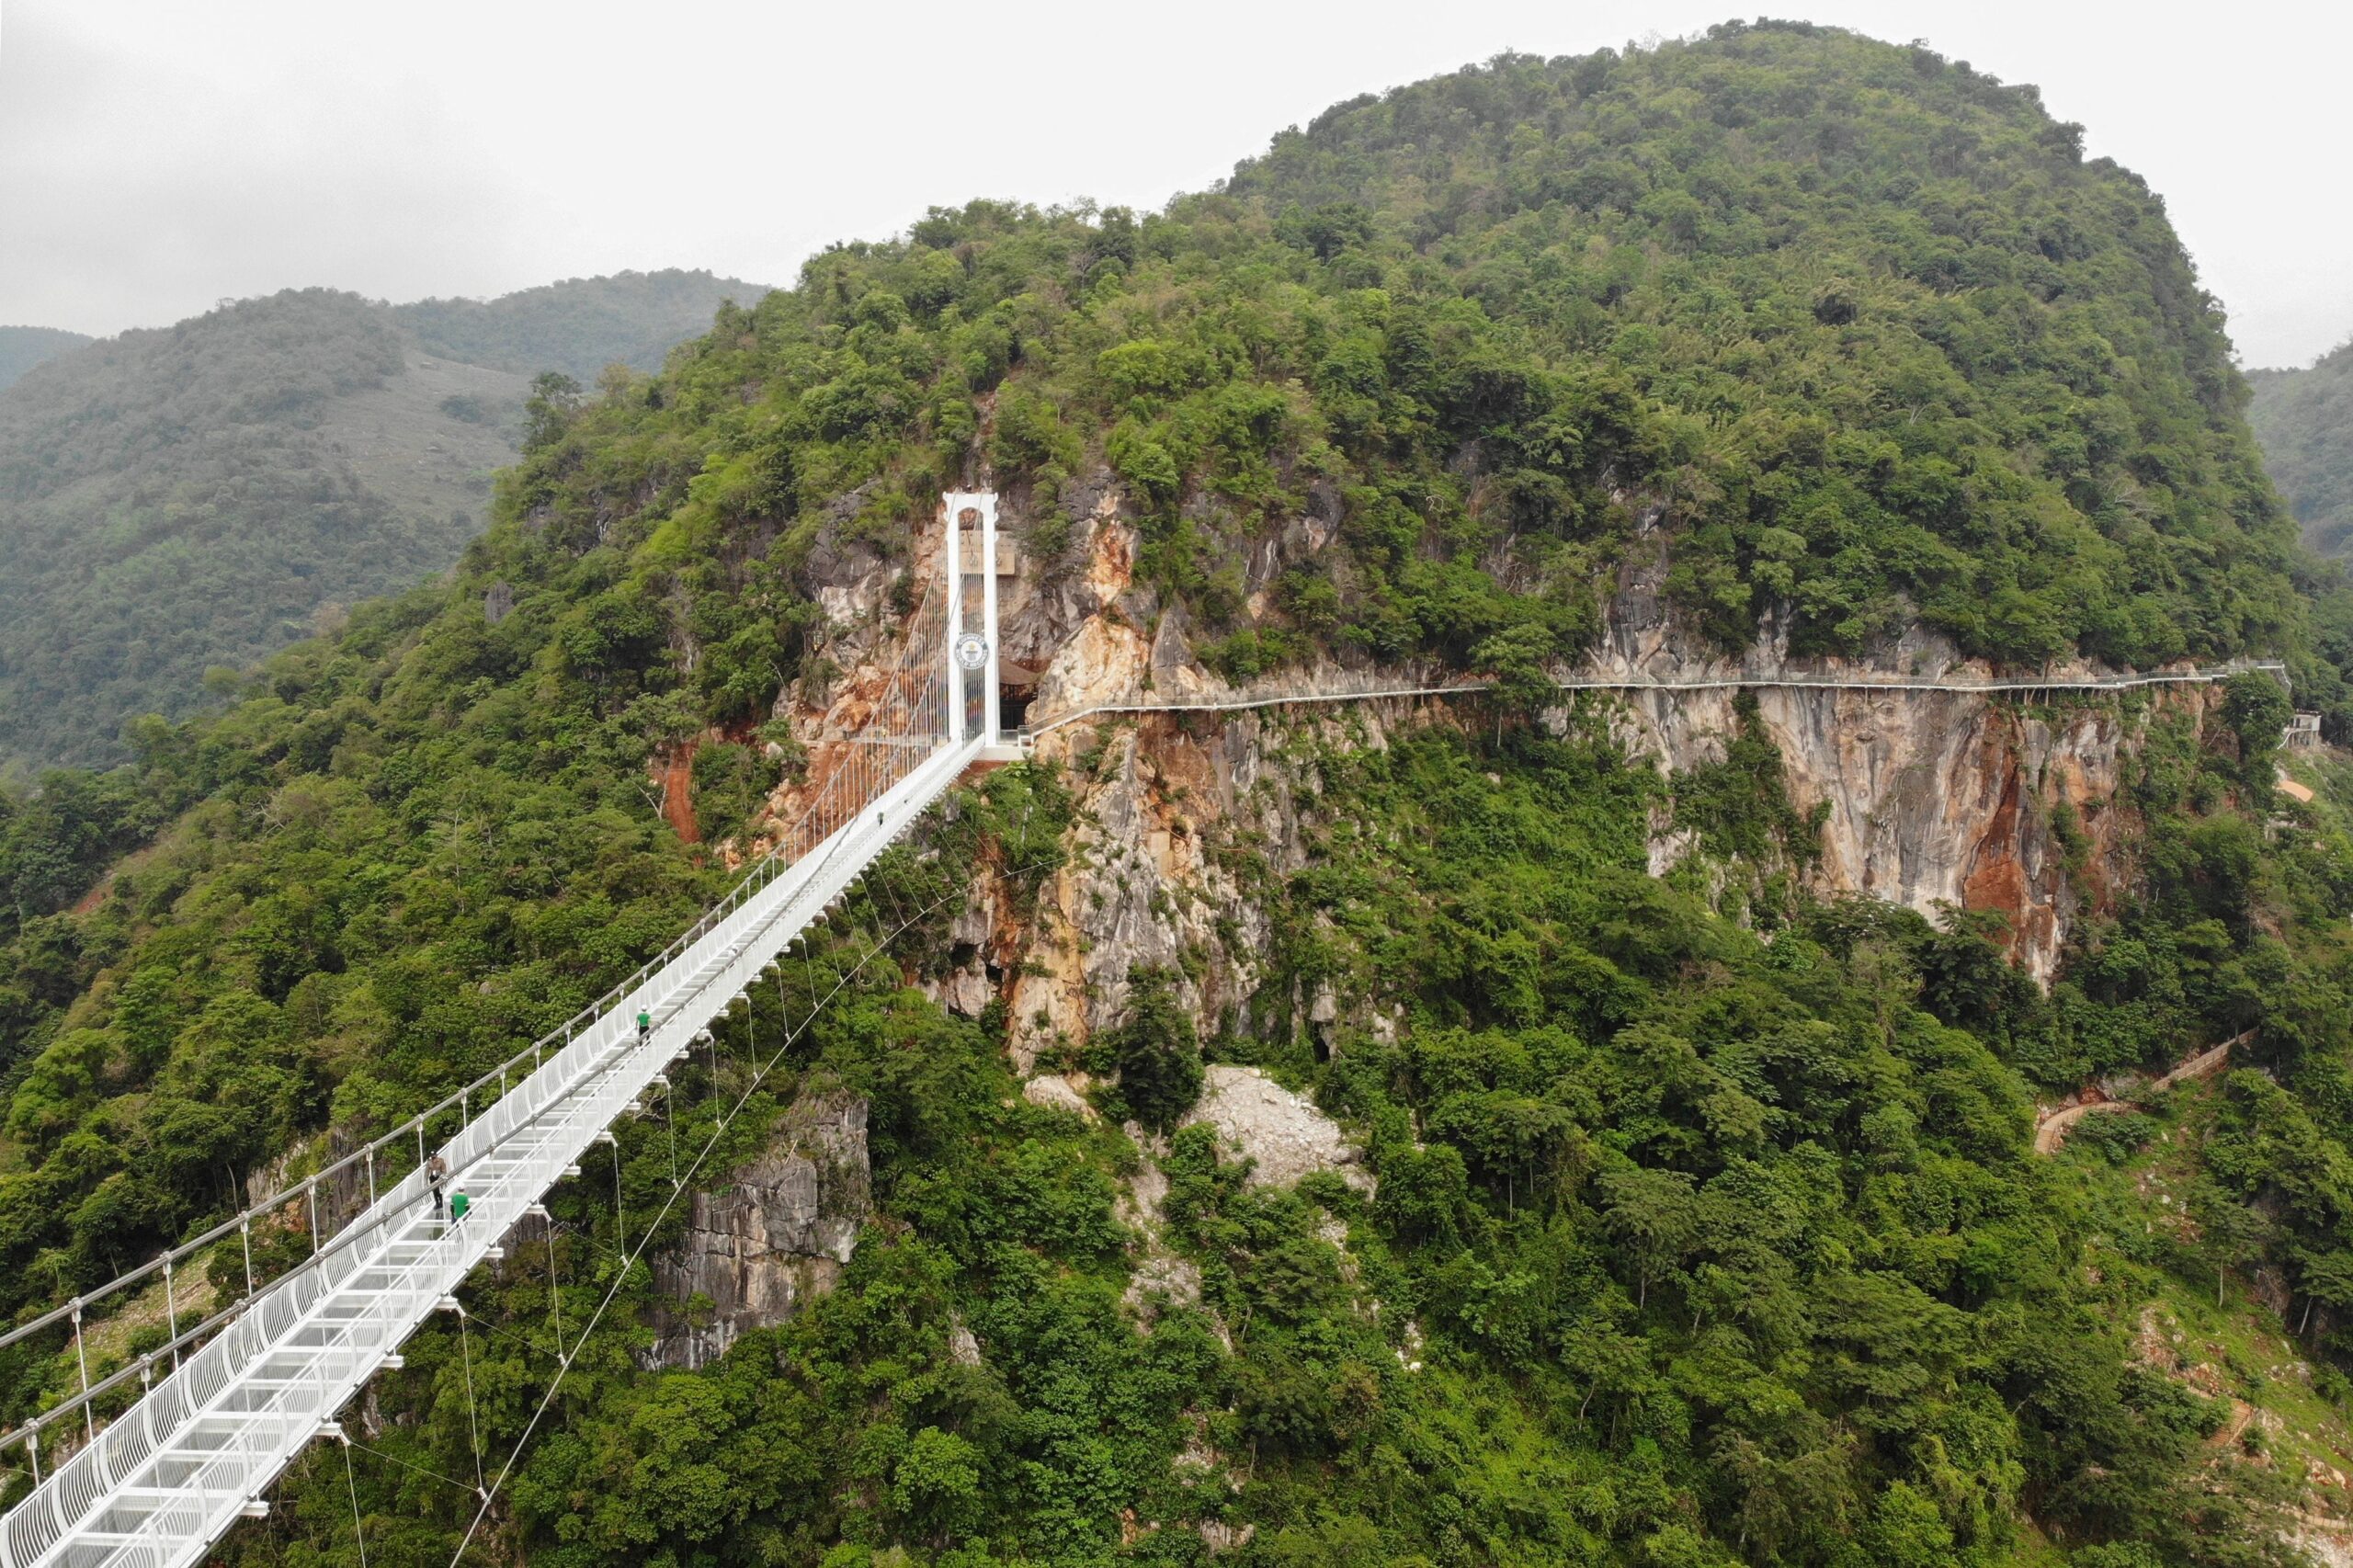 the Bach Long glass bridge in the Moc Chau district in Vietnam&#39;s Son La province